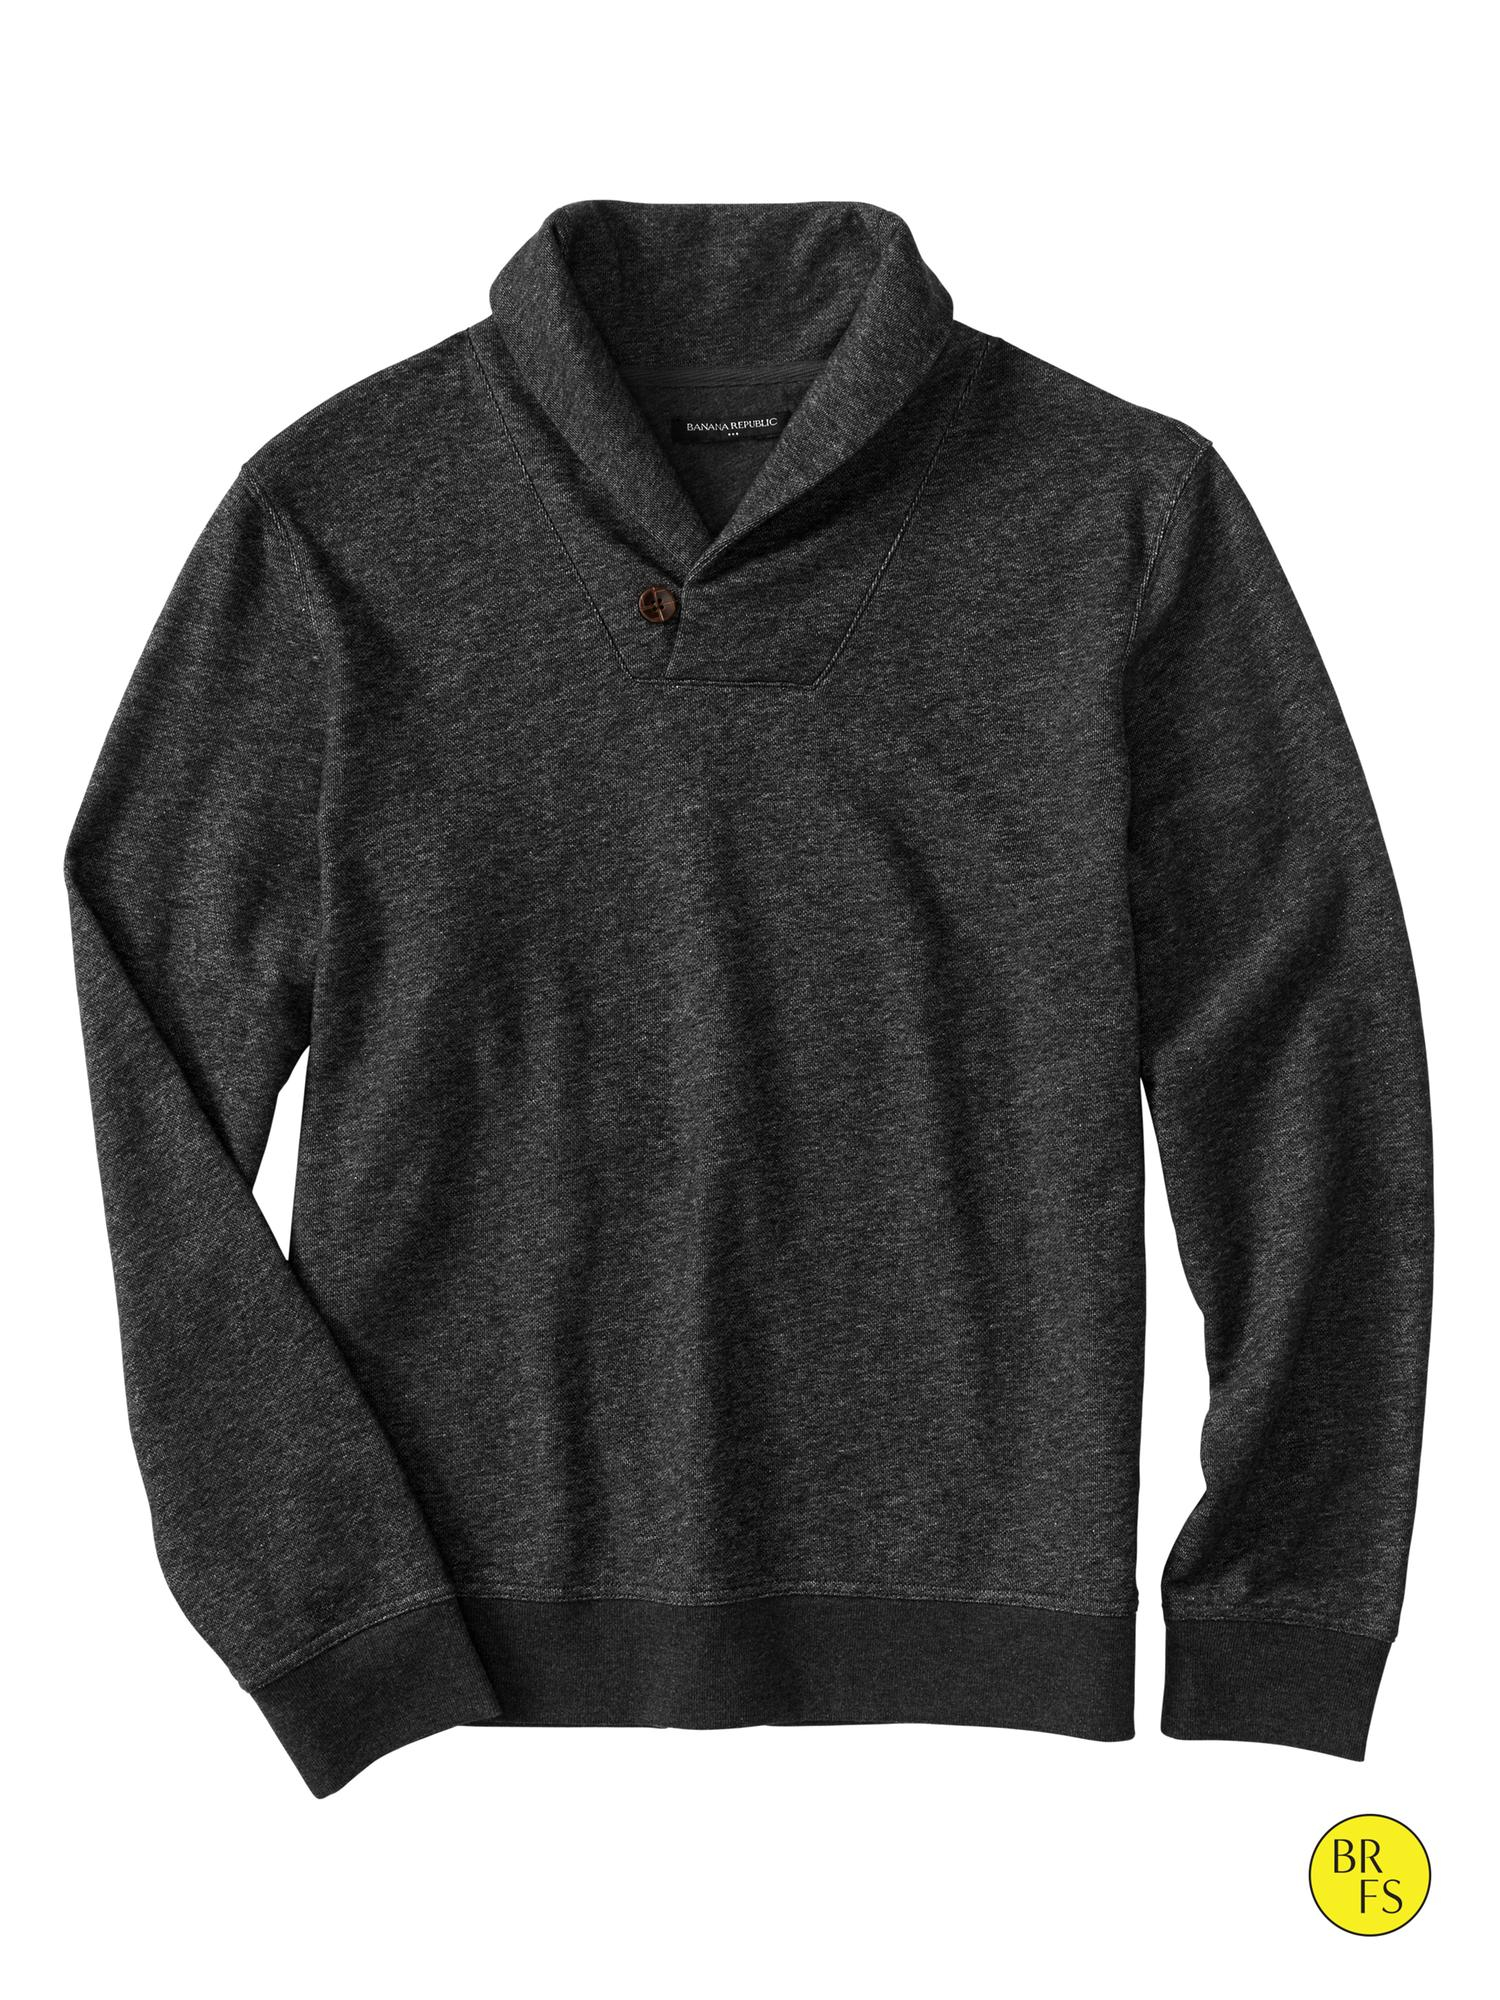 Banana Republic Factory Shawl-Collar Sweater in Black for Men - Lyst